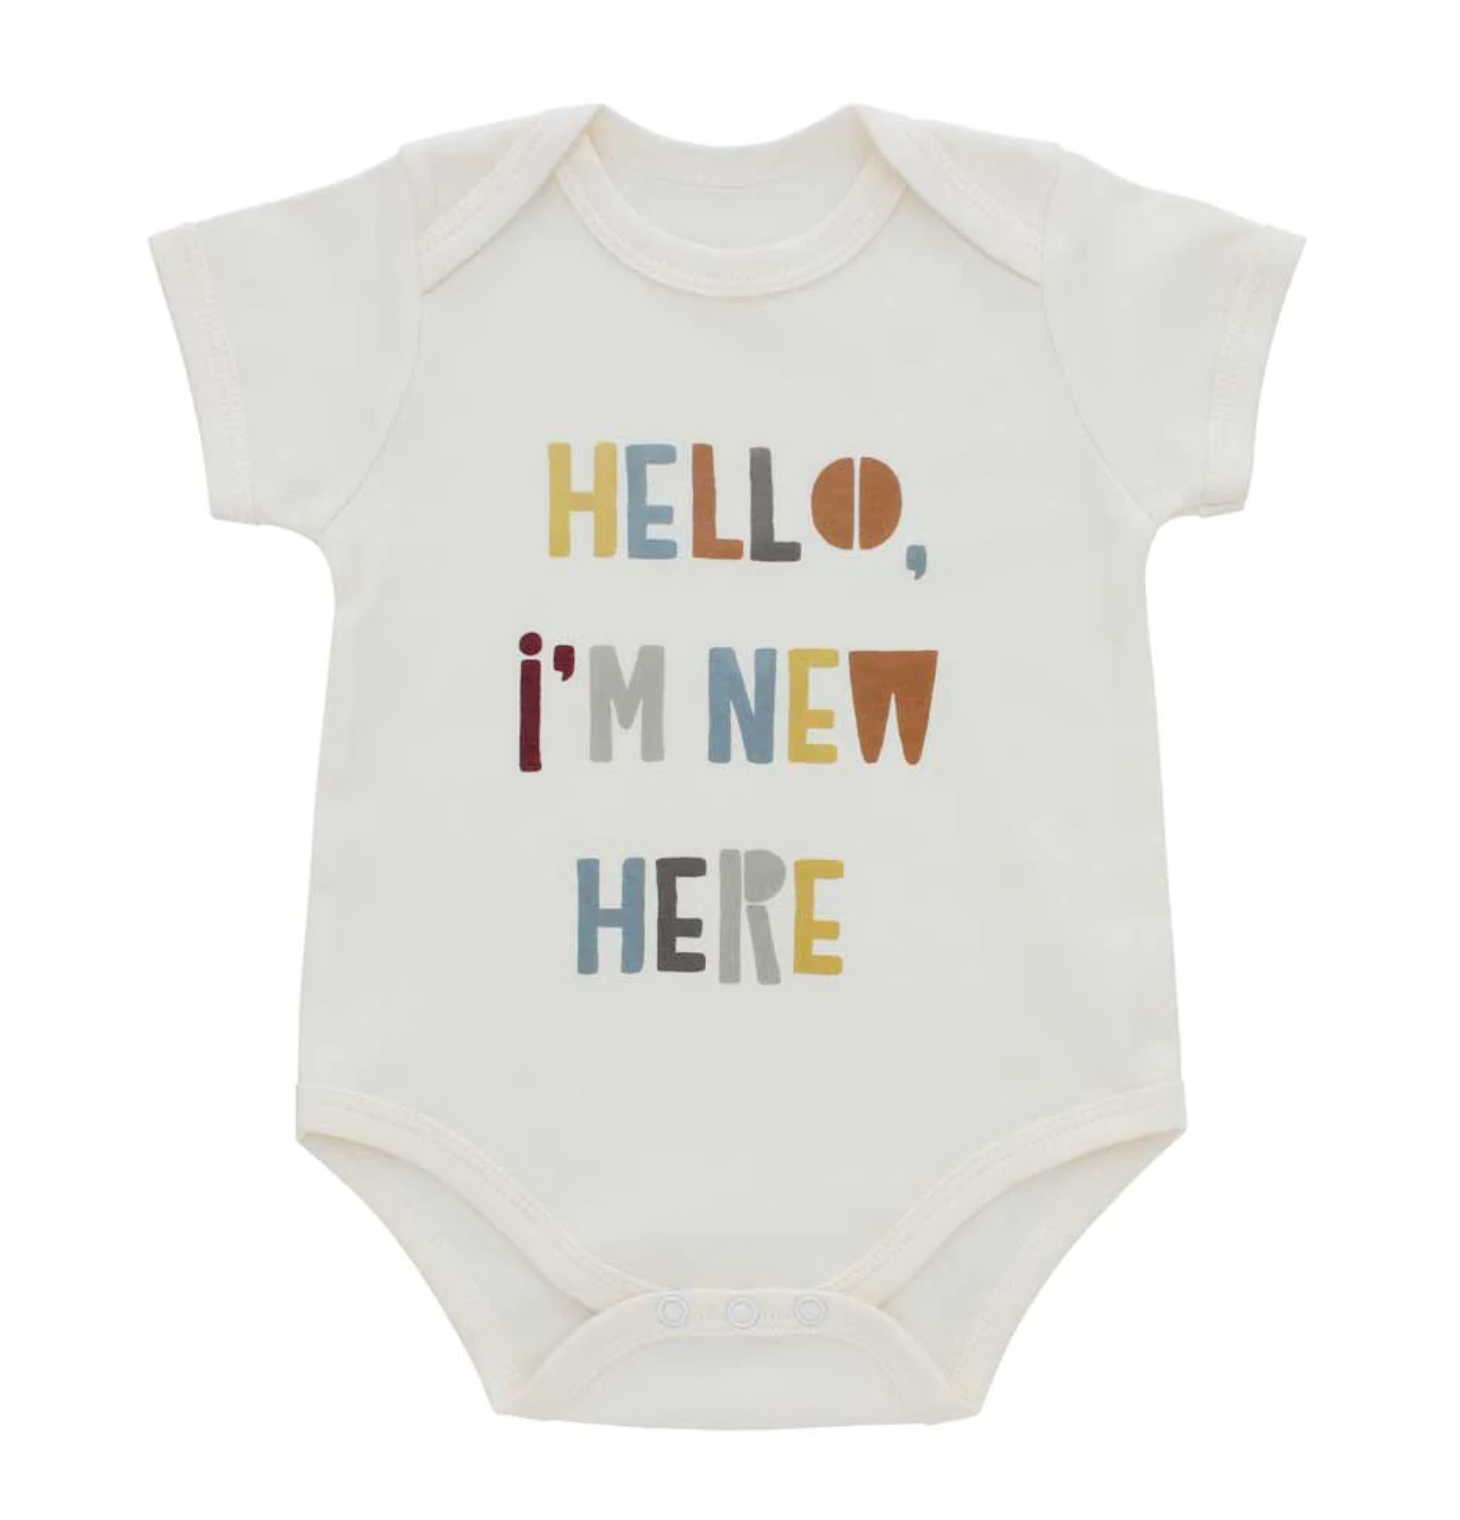 Emerson and Friends - Hello I'm New Here Cotton Baby Onesie Newborn Baby Gift